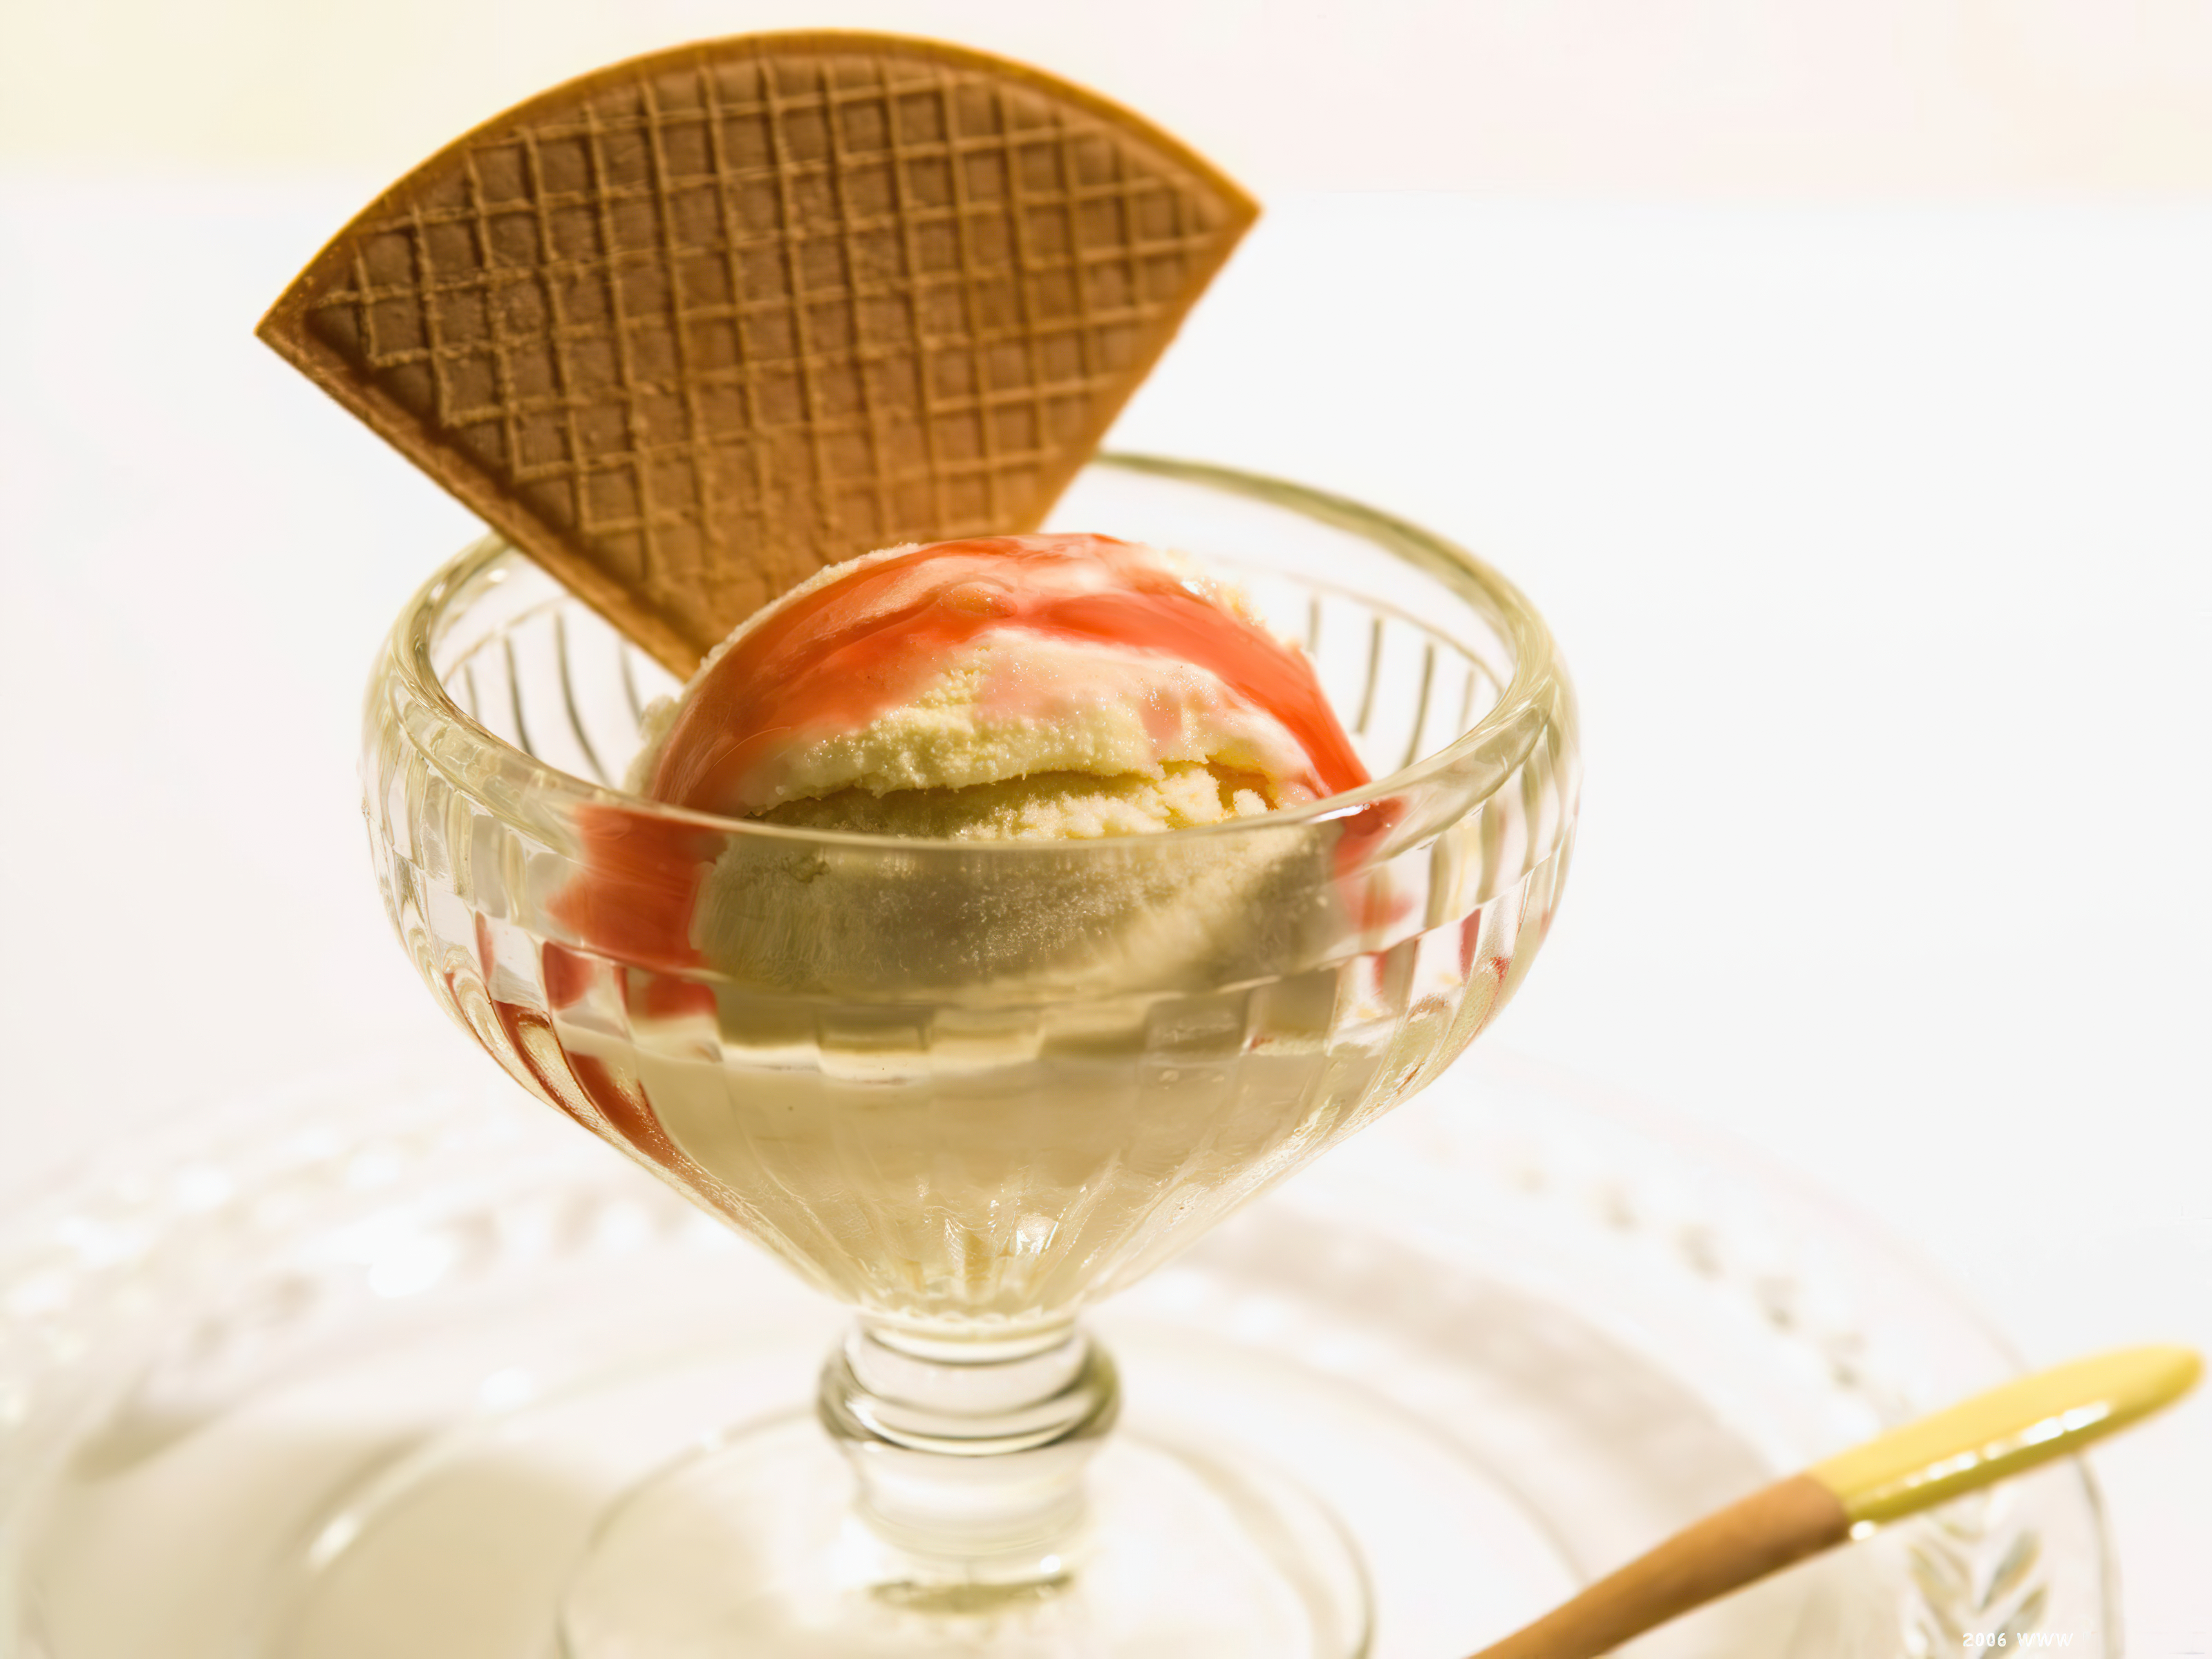 Delicious ice cream dessert with enticing food presentation.